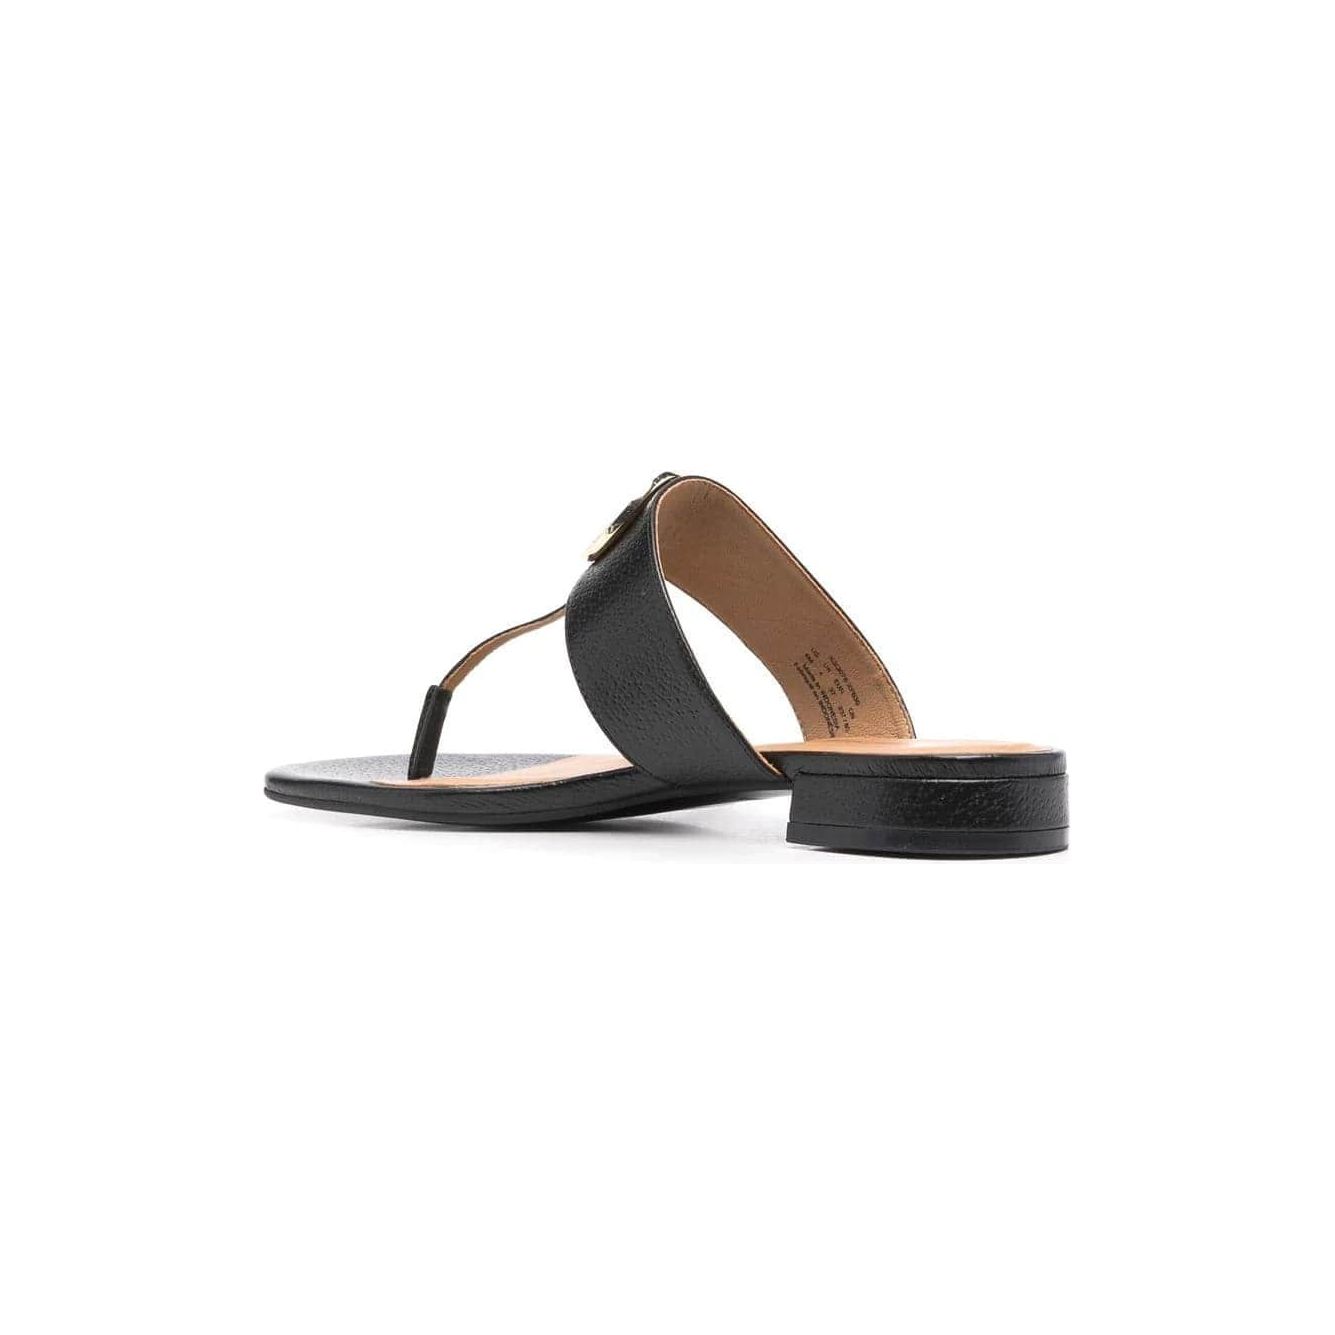 Emporio Armani sandals - Yooto